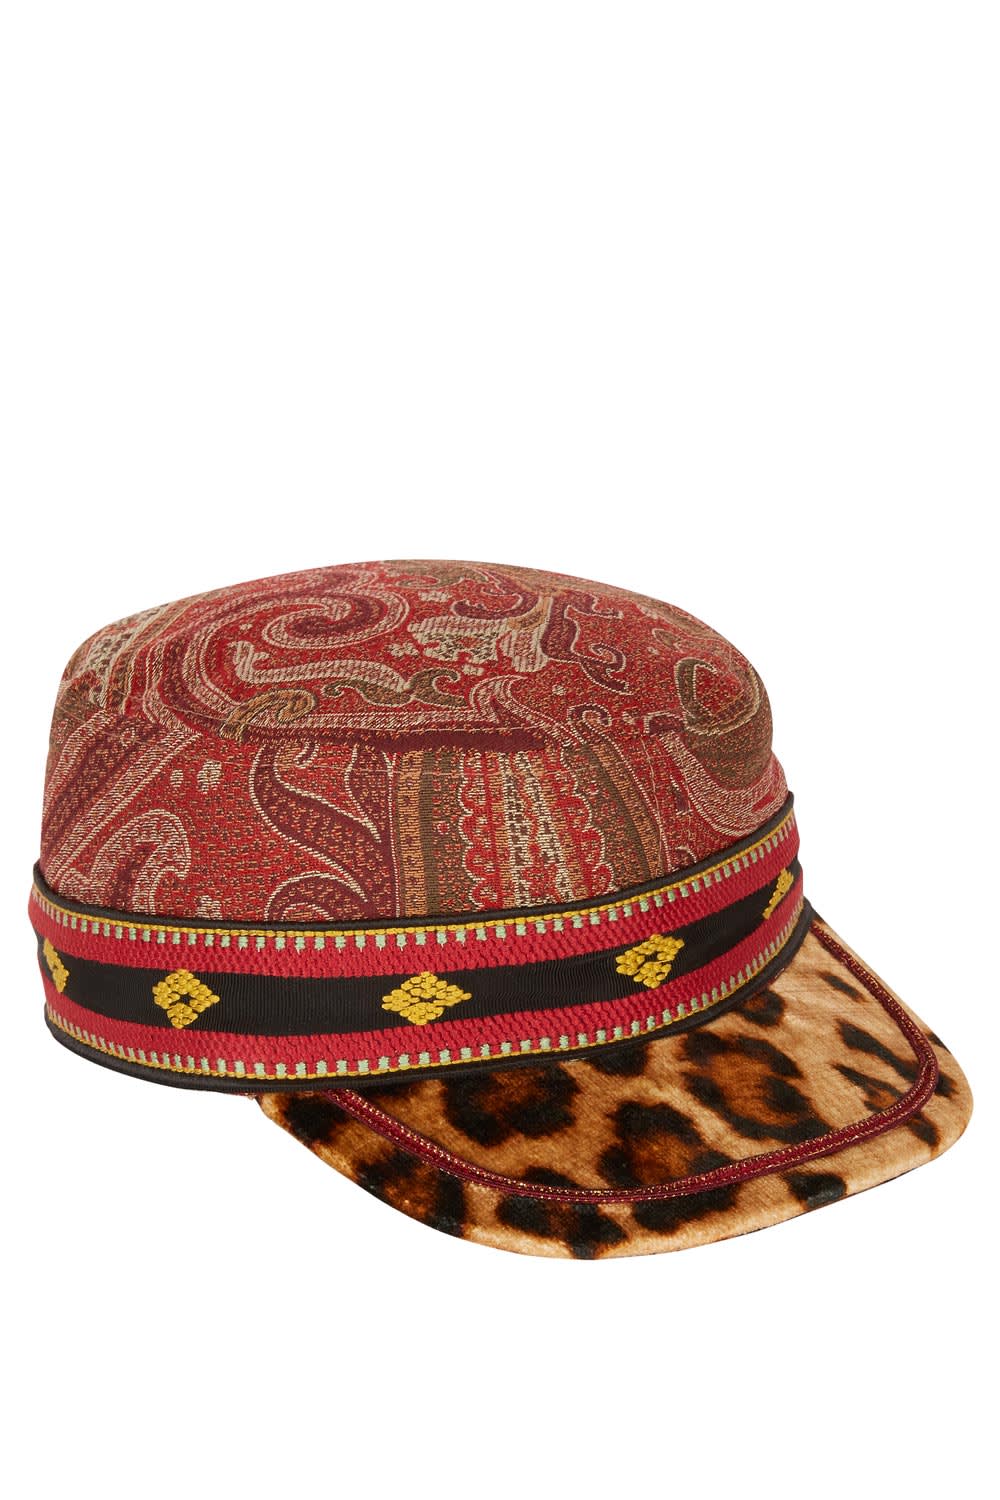 Etro Jacquard Patchwork Hat